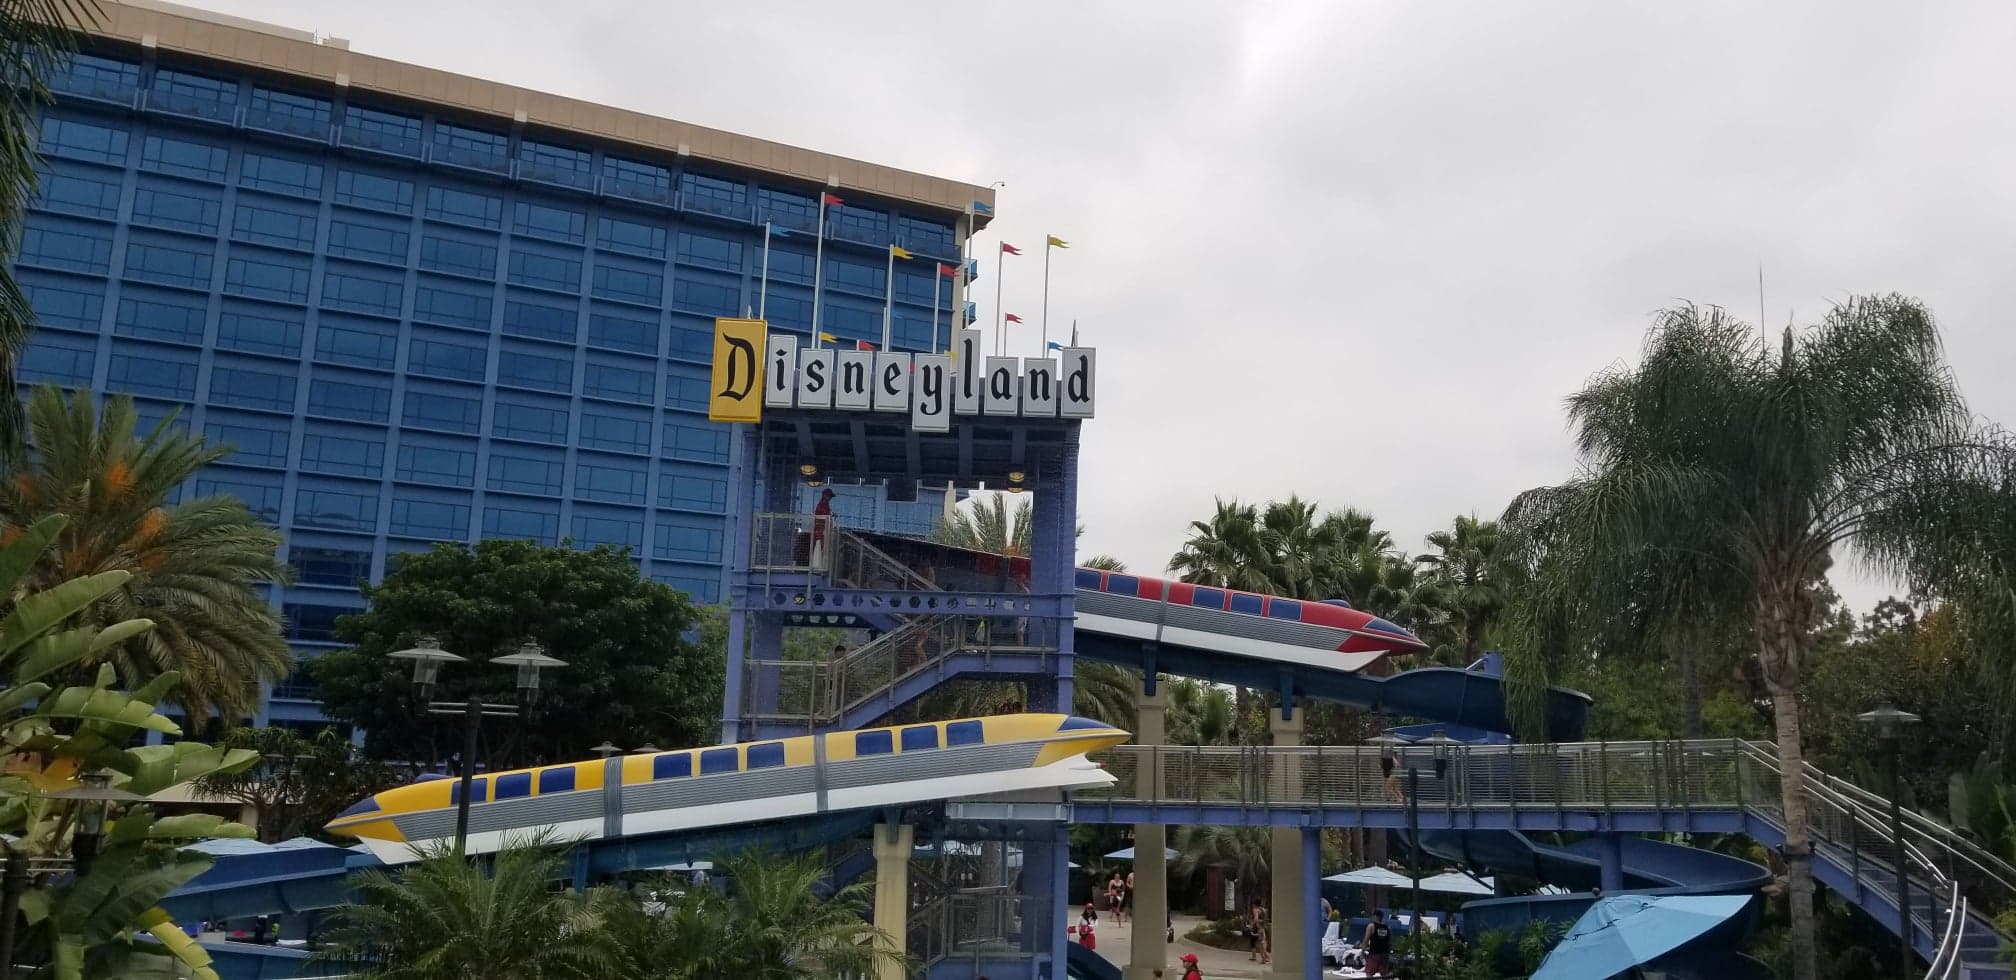 Disneyland will Remain Closed Through October